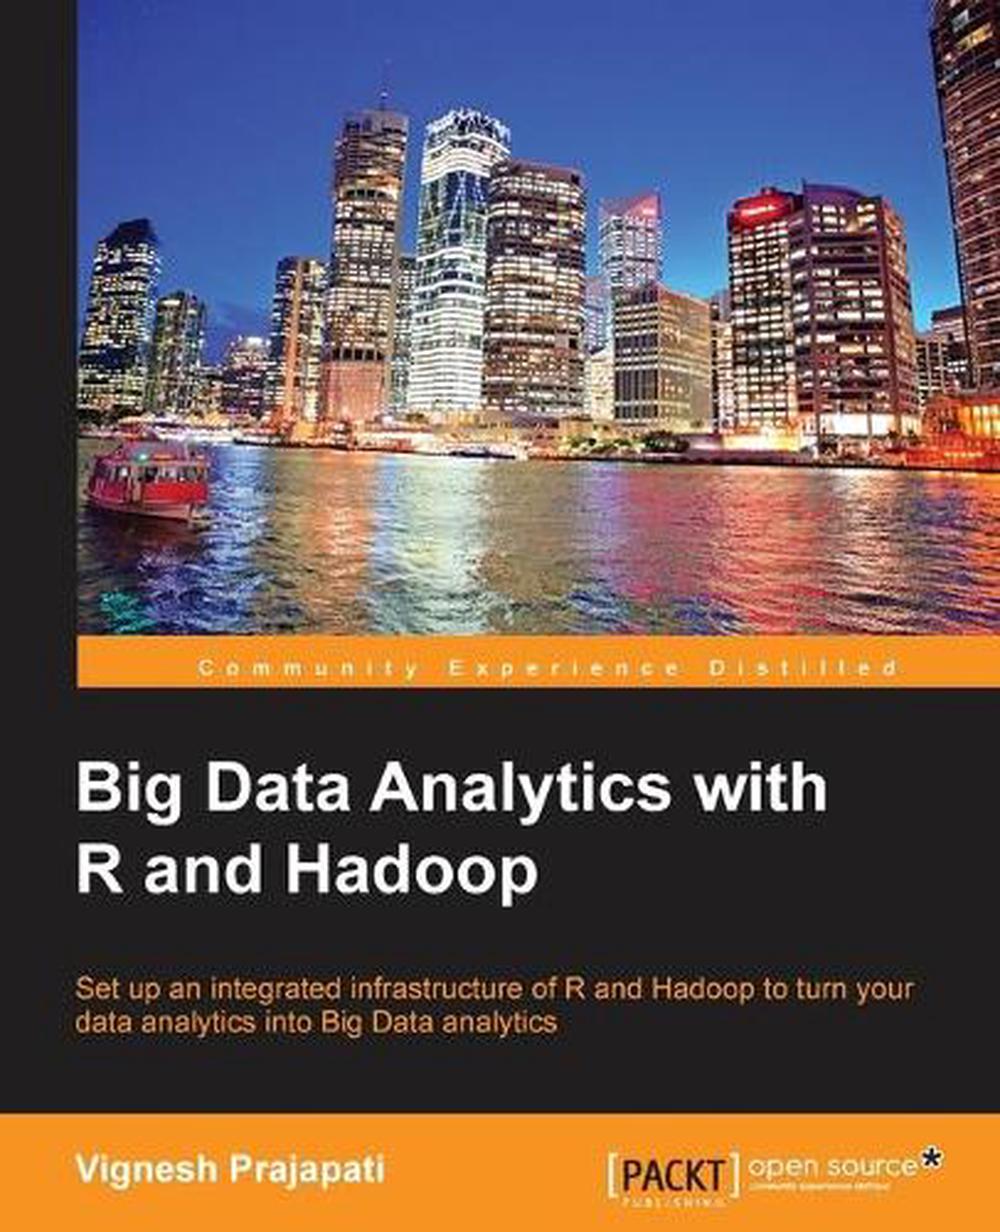 Big Data Analytics with R and Hadoop by Vignesh Prajapati ...